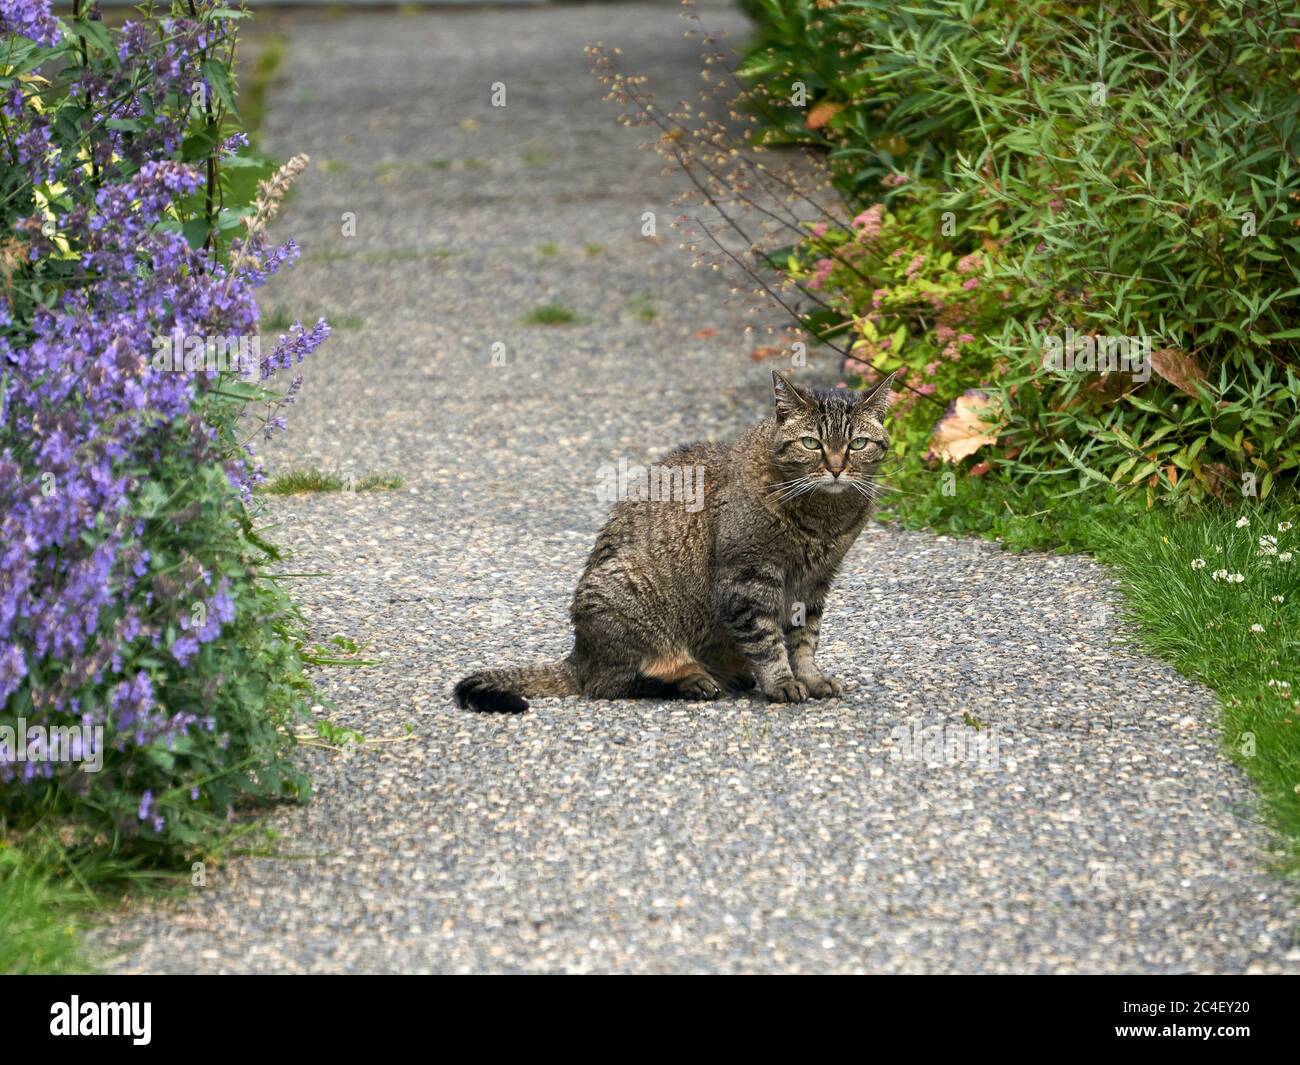 Cross-looking grumpy tabby cat sitting on a garden path Stock Photo